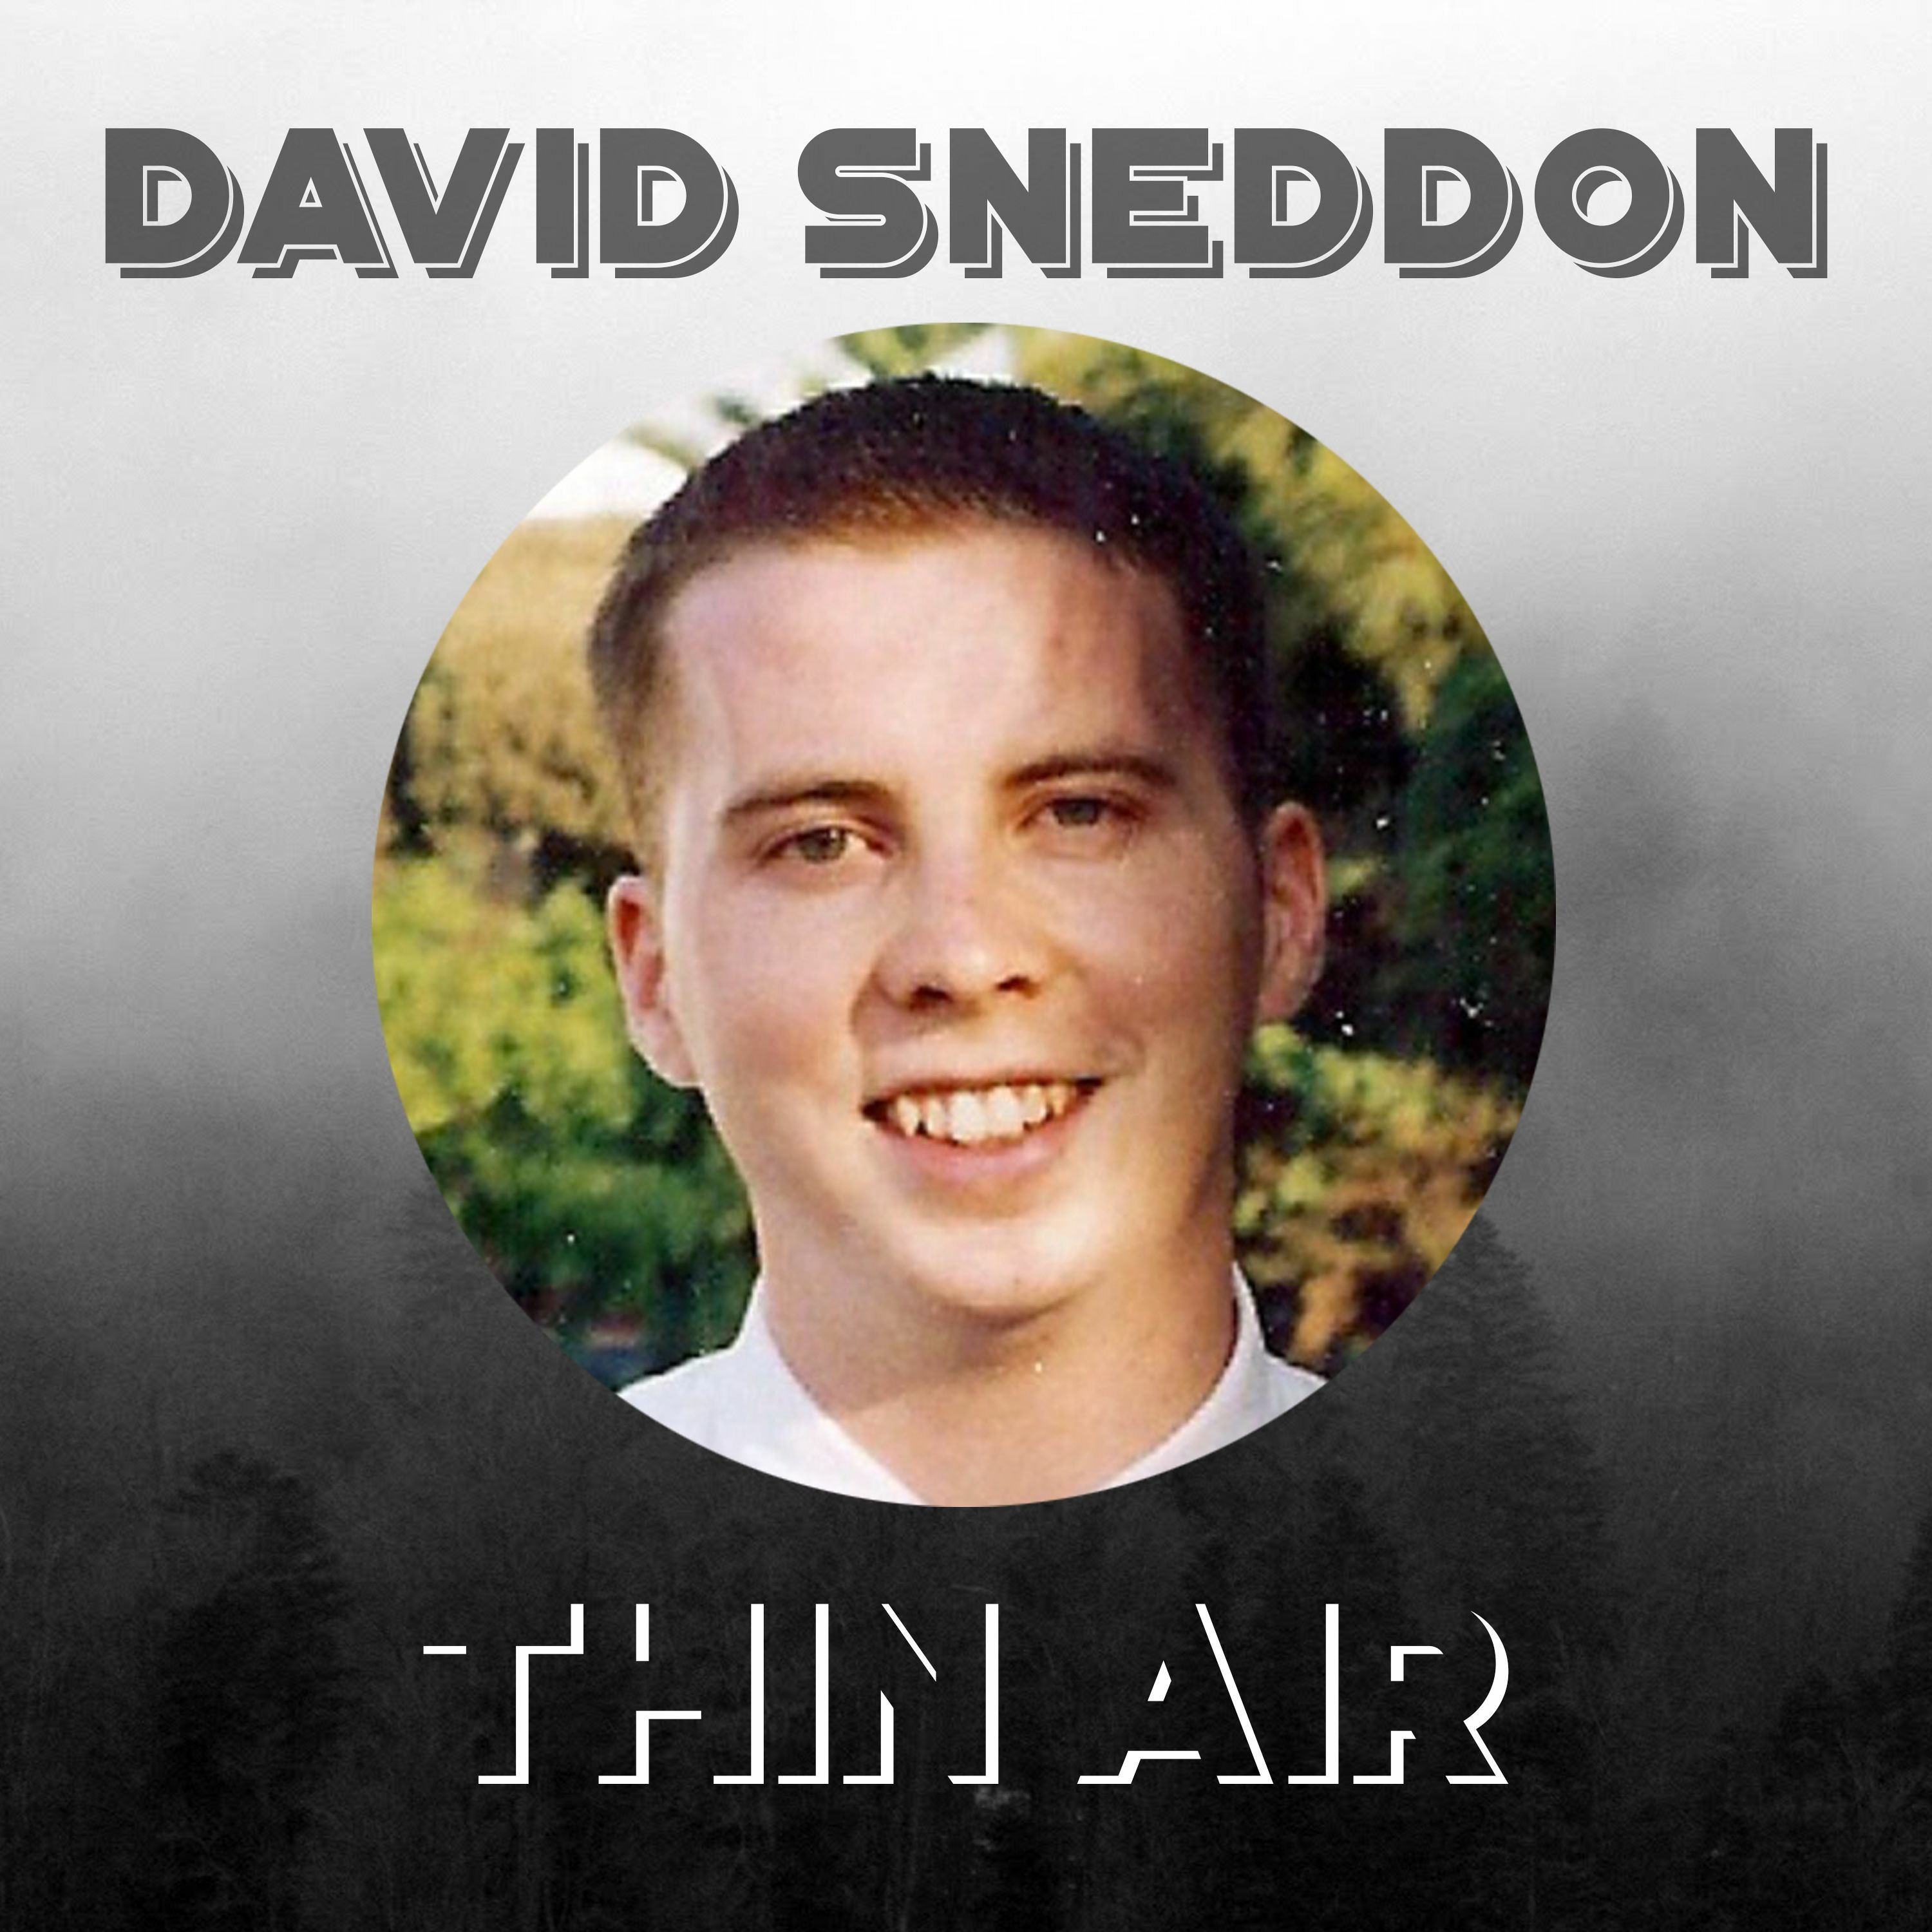 Episode 23 - David Sneddon (Part 2)